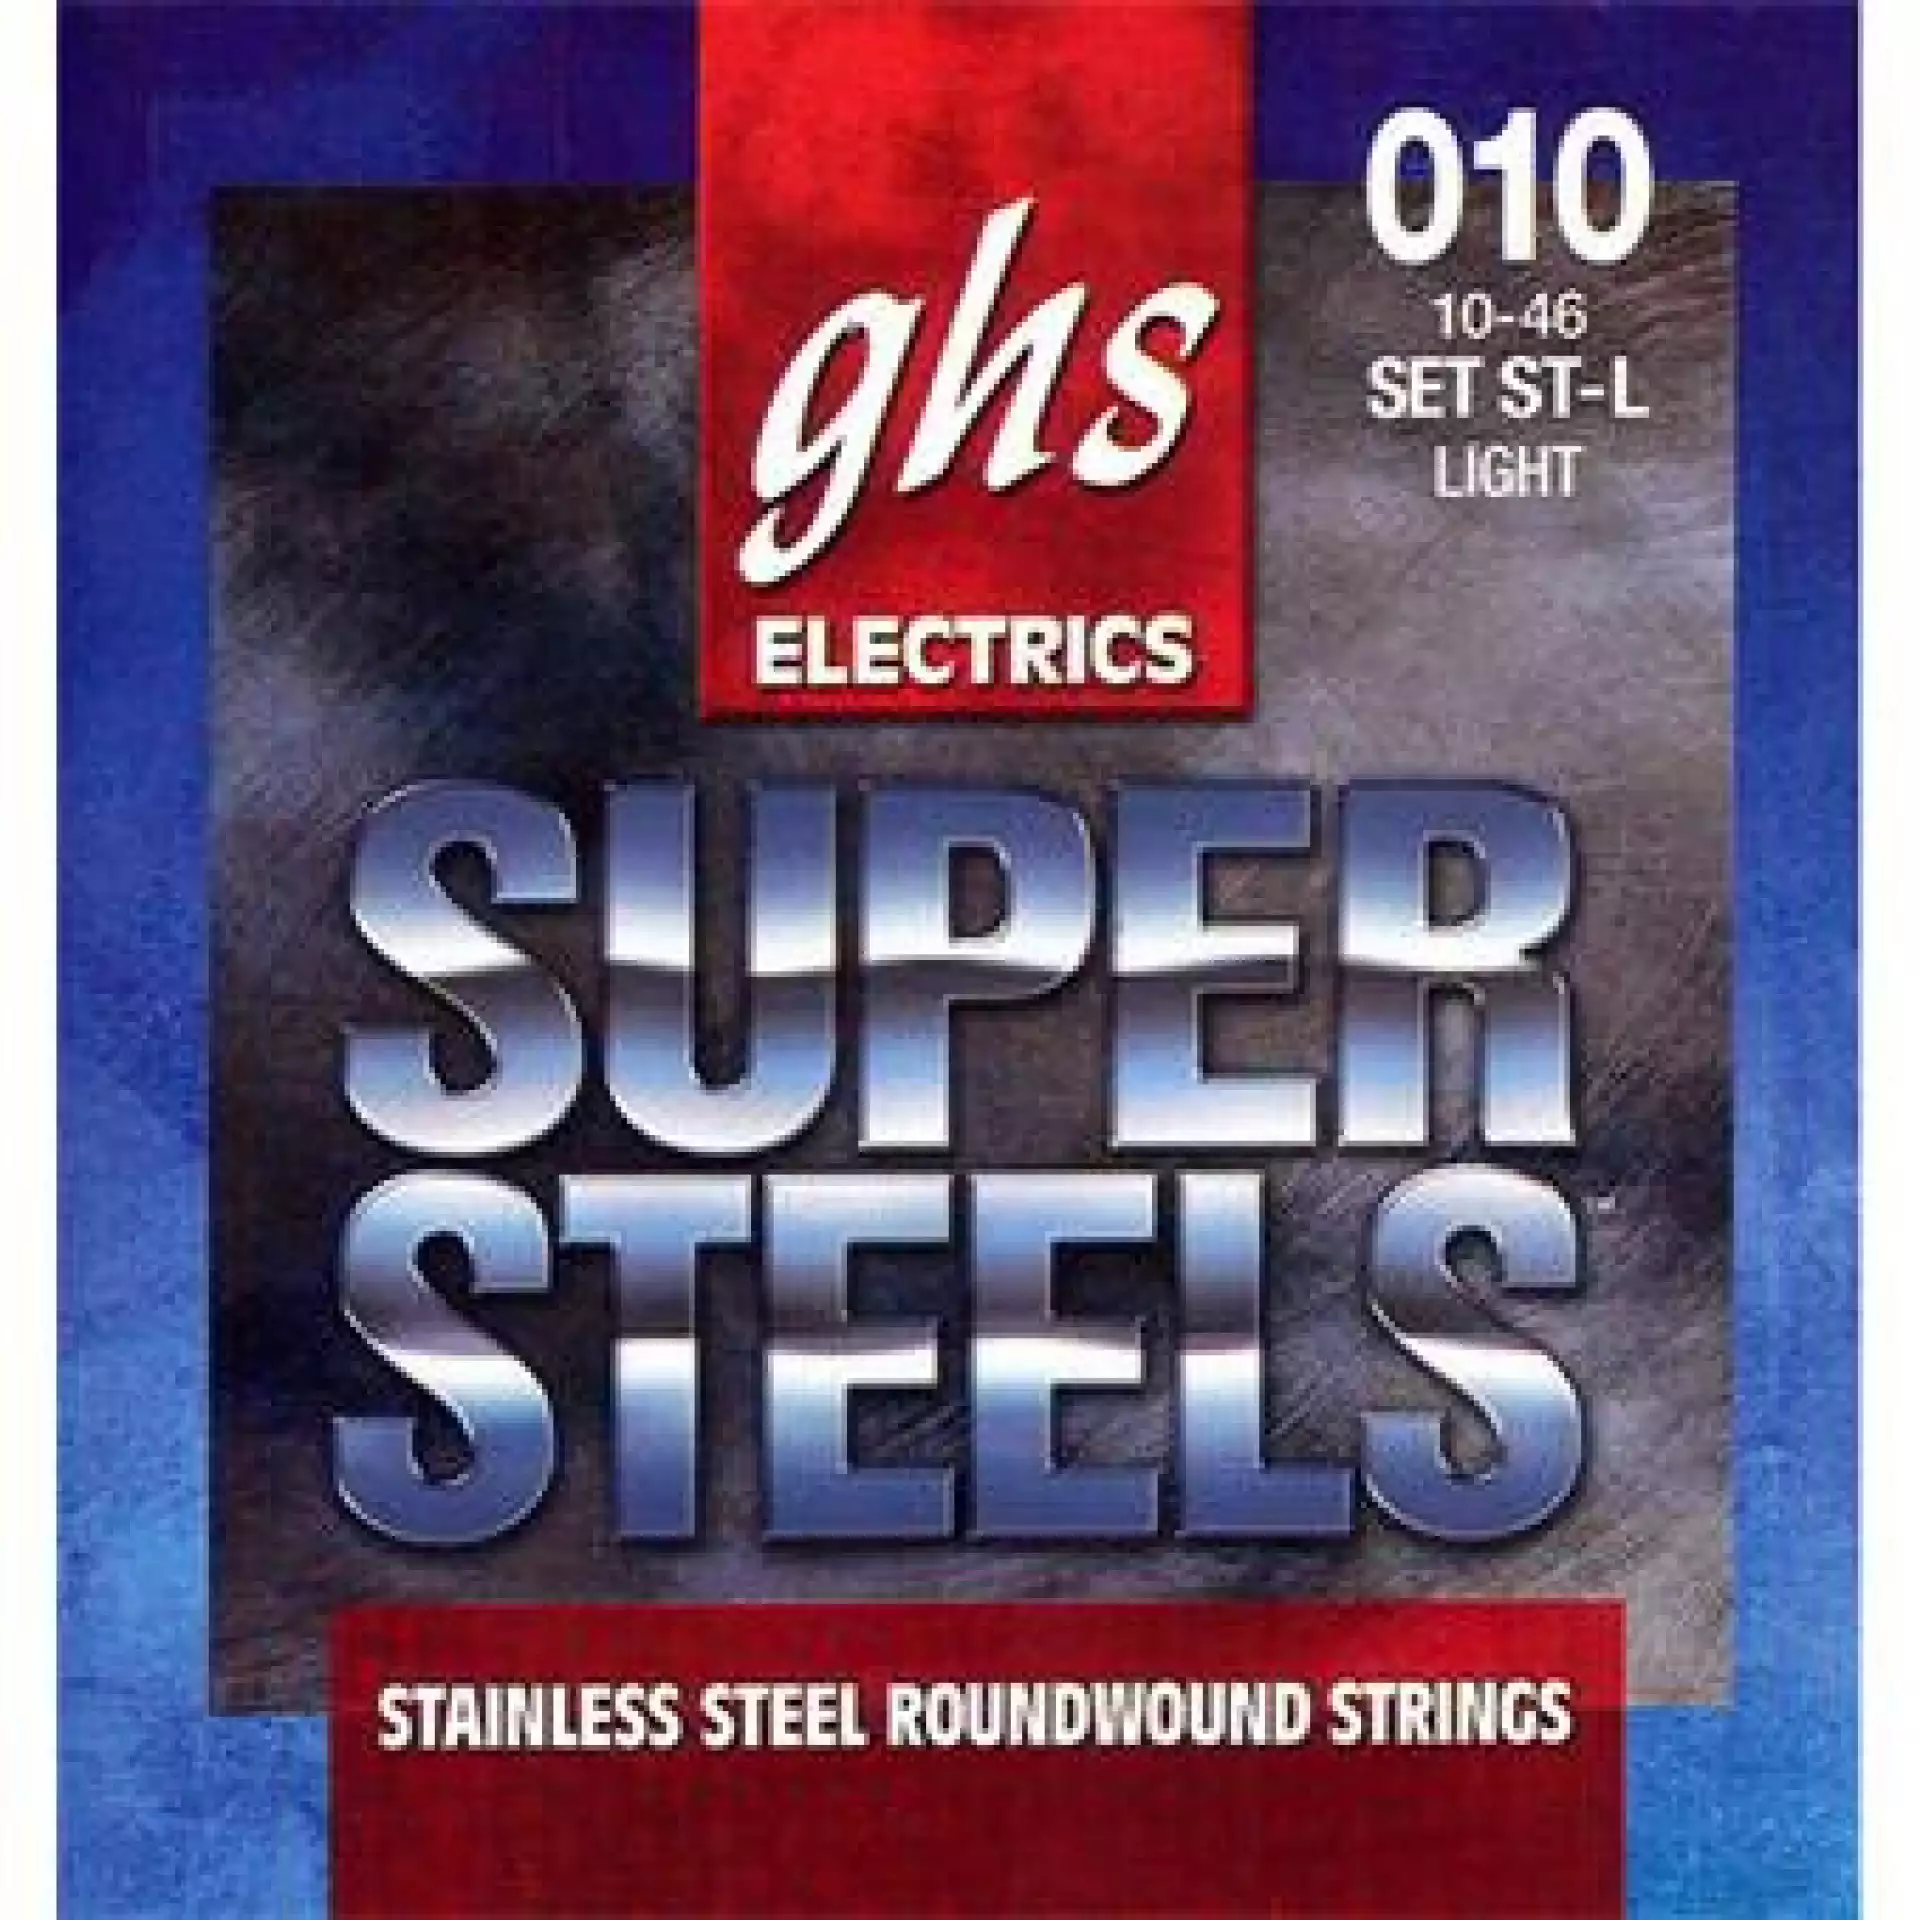 GHS ST-L Light Super Steels Electric Guitar Strings - Žice za električnu gitaru